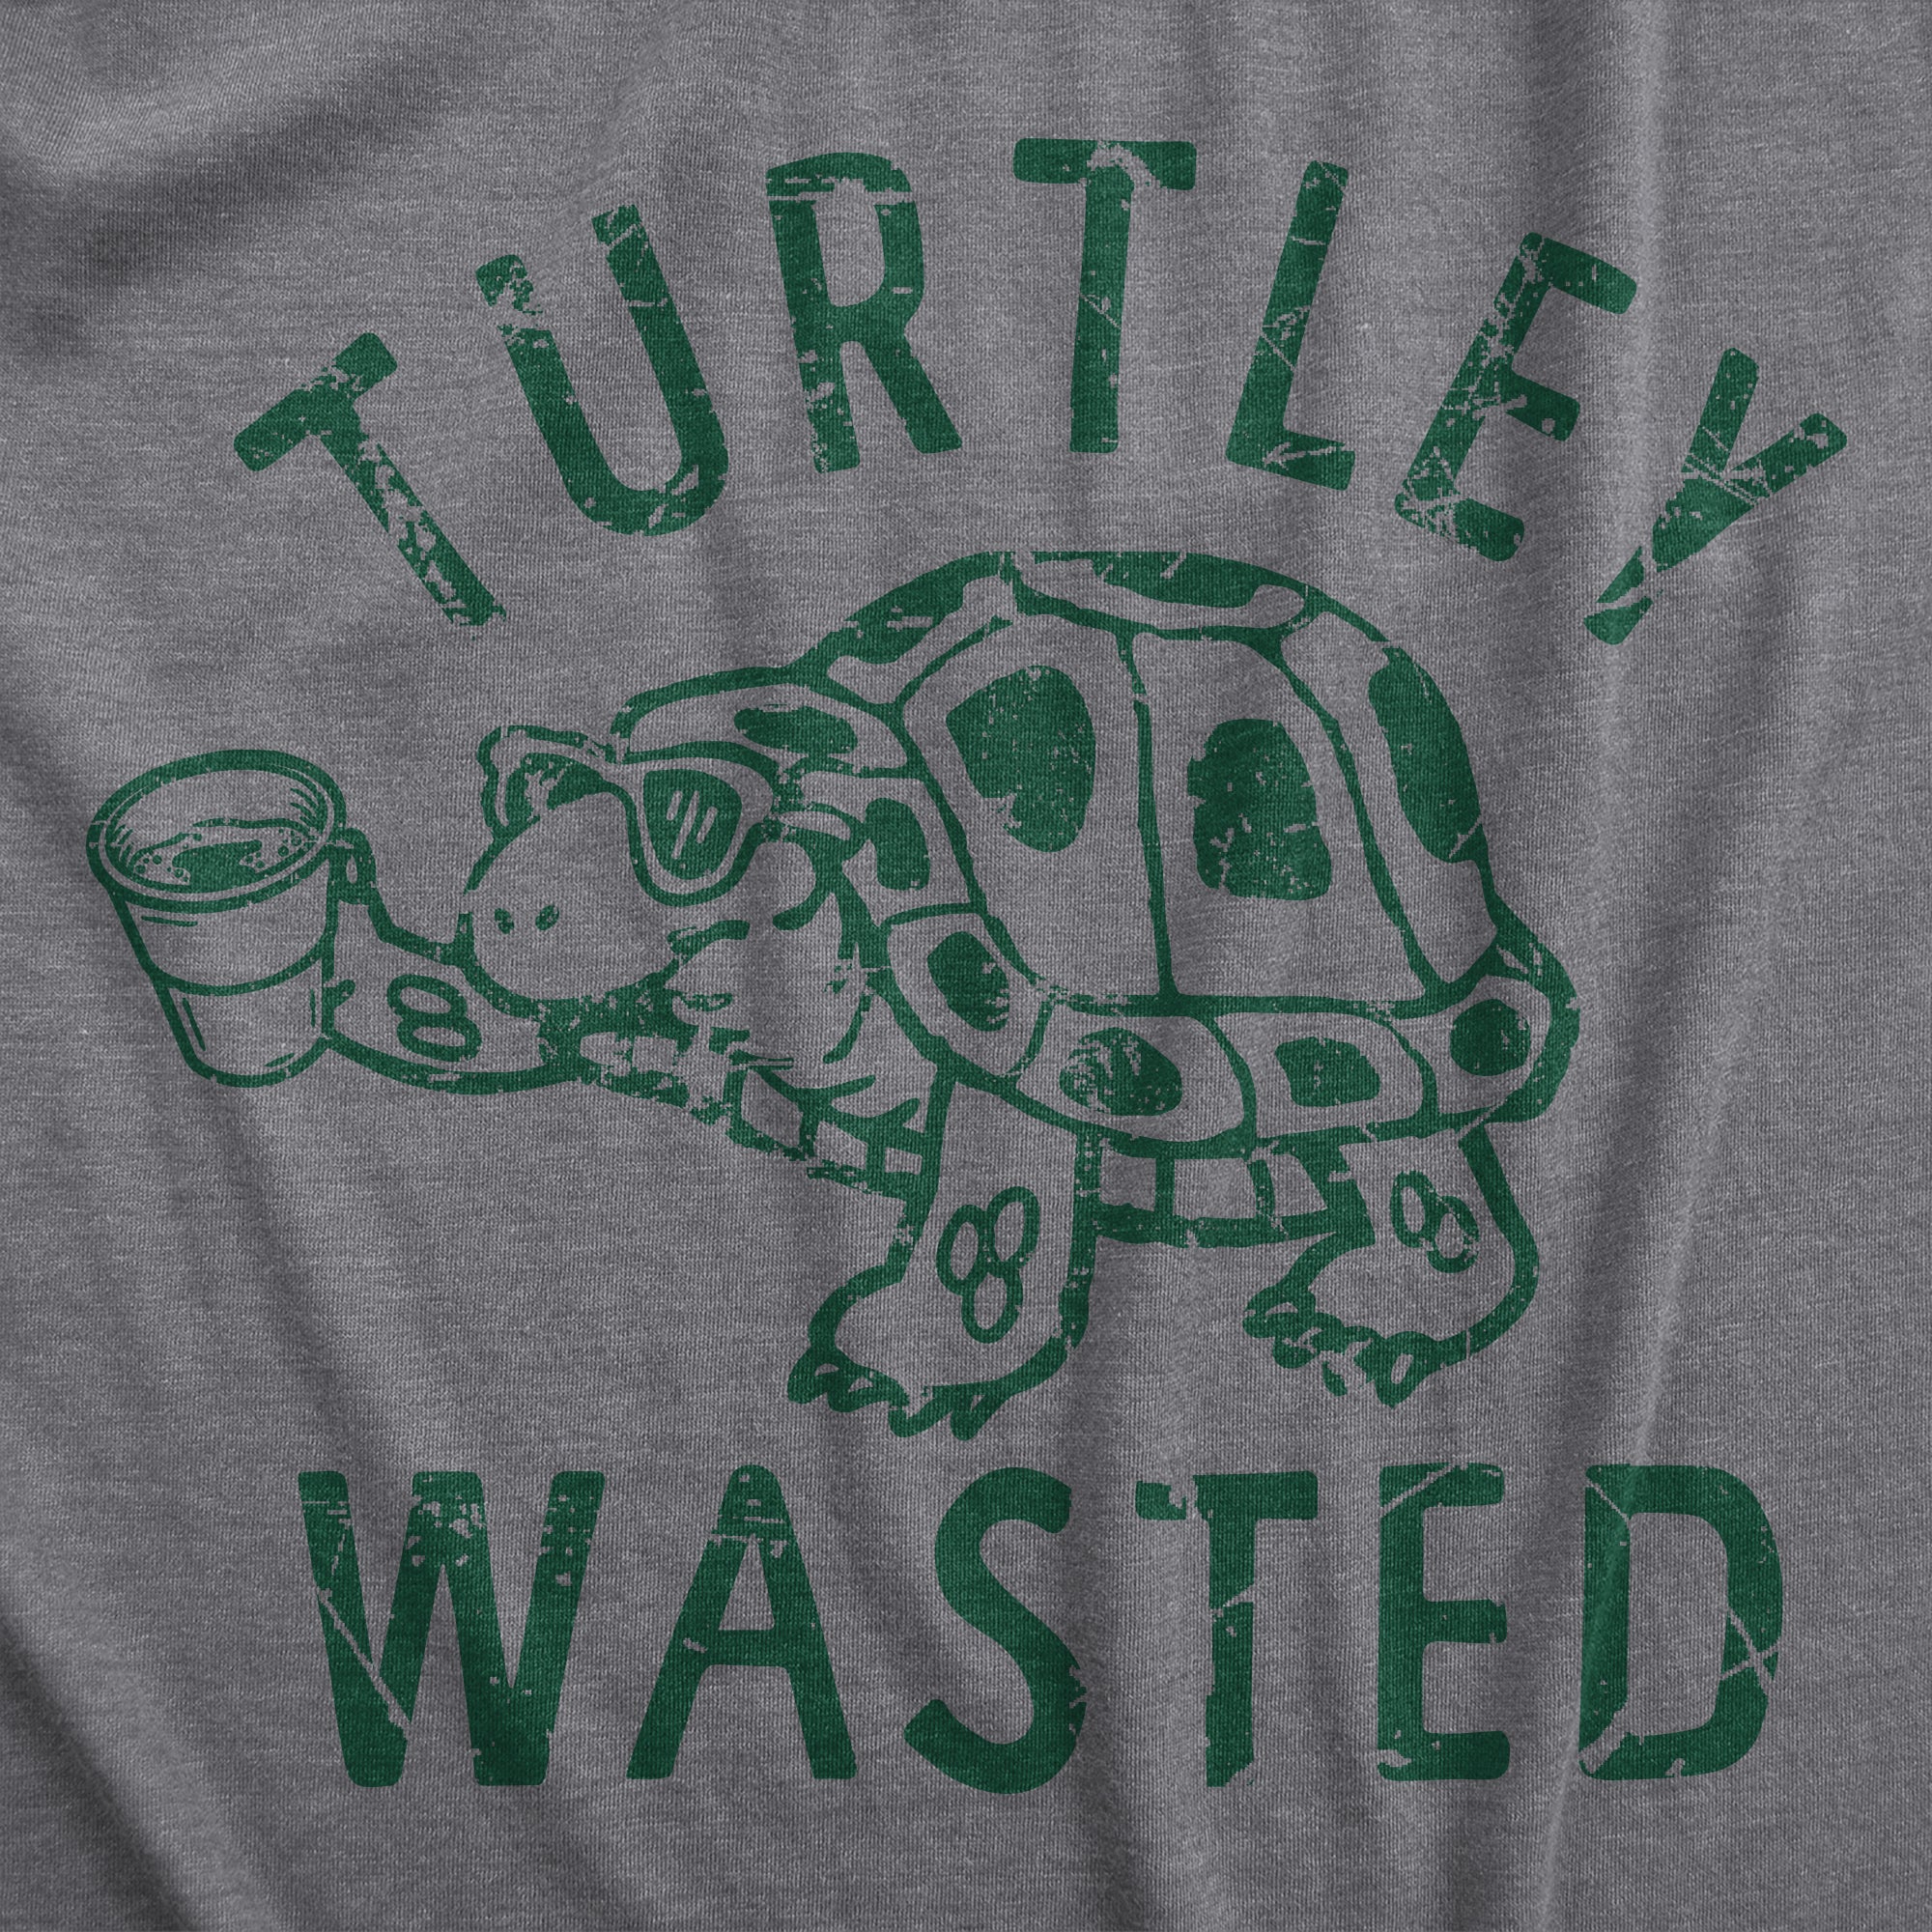 Funny Dark Heather Grey - TURTLEY Turtley Wasted Womens T Shirt Nerdy Drinking Animal Tee